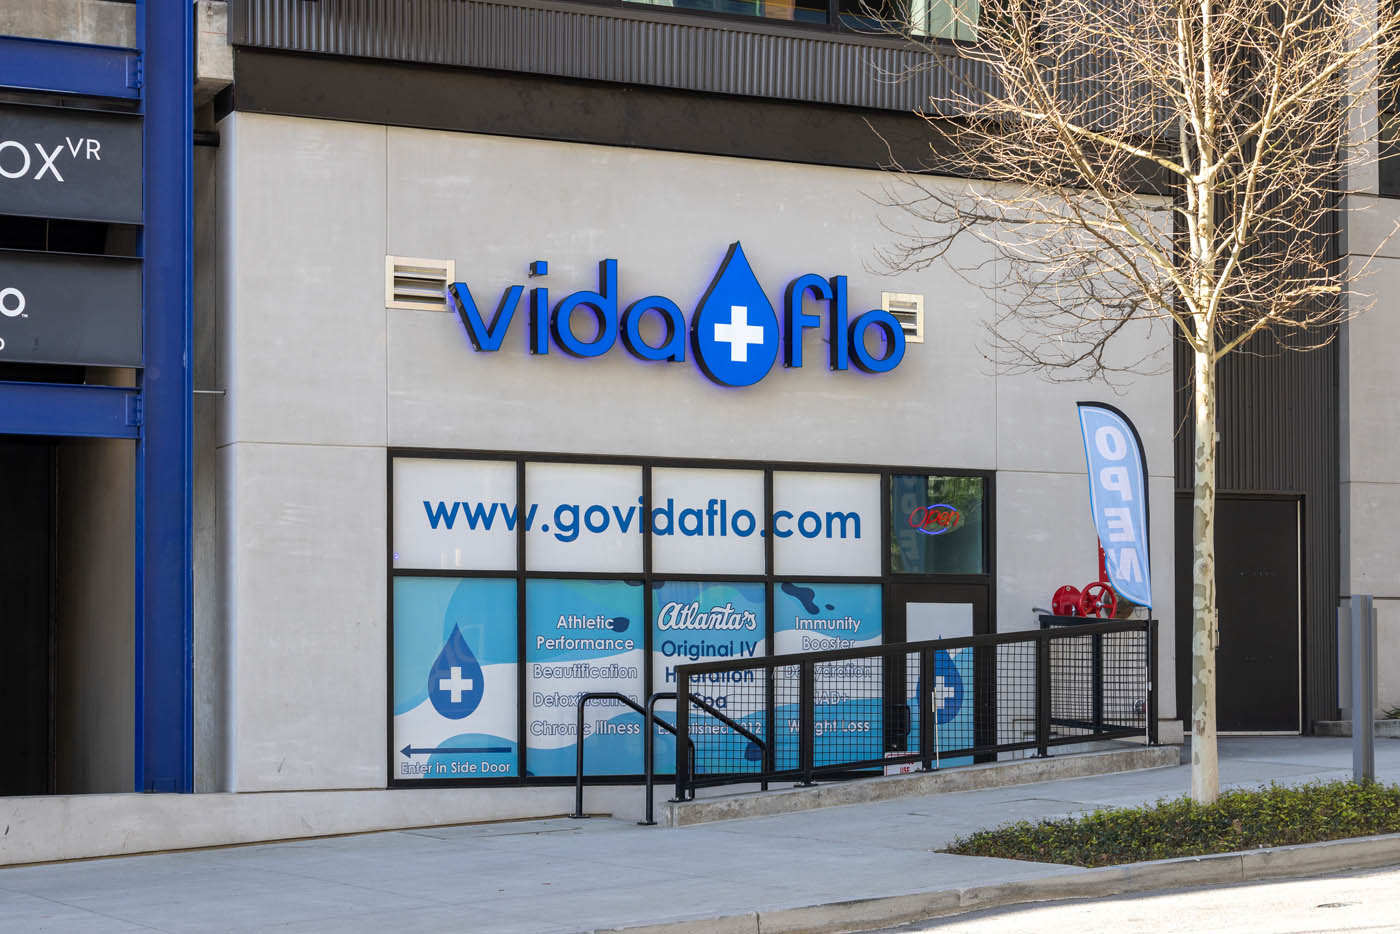 Vida-Flo Atlanta store front.